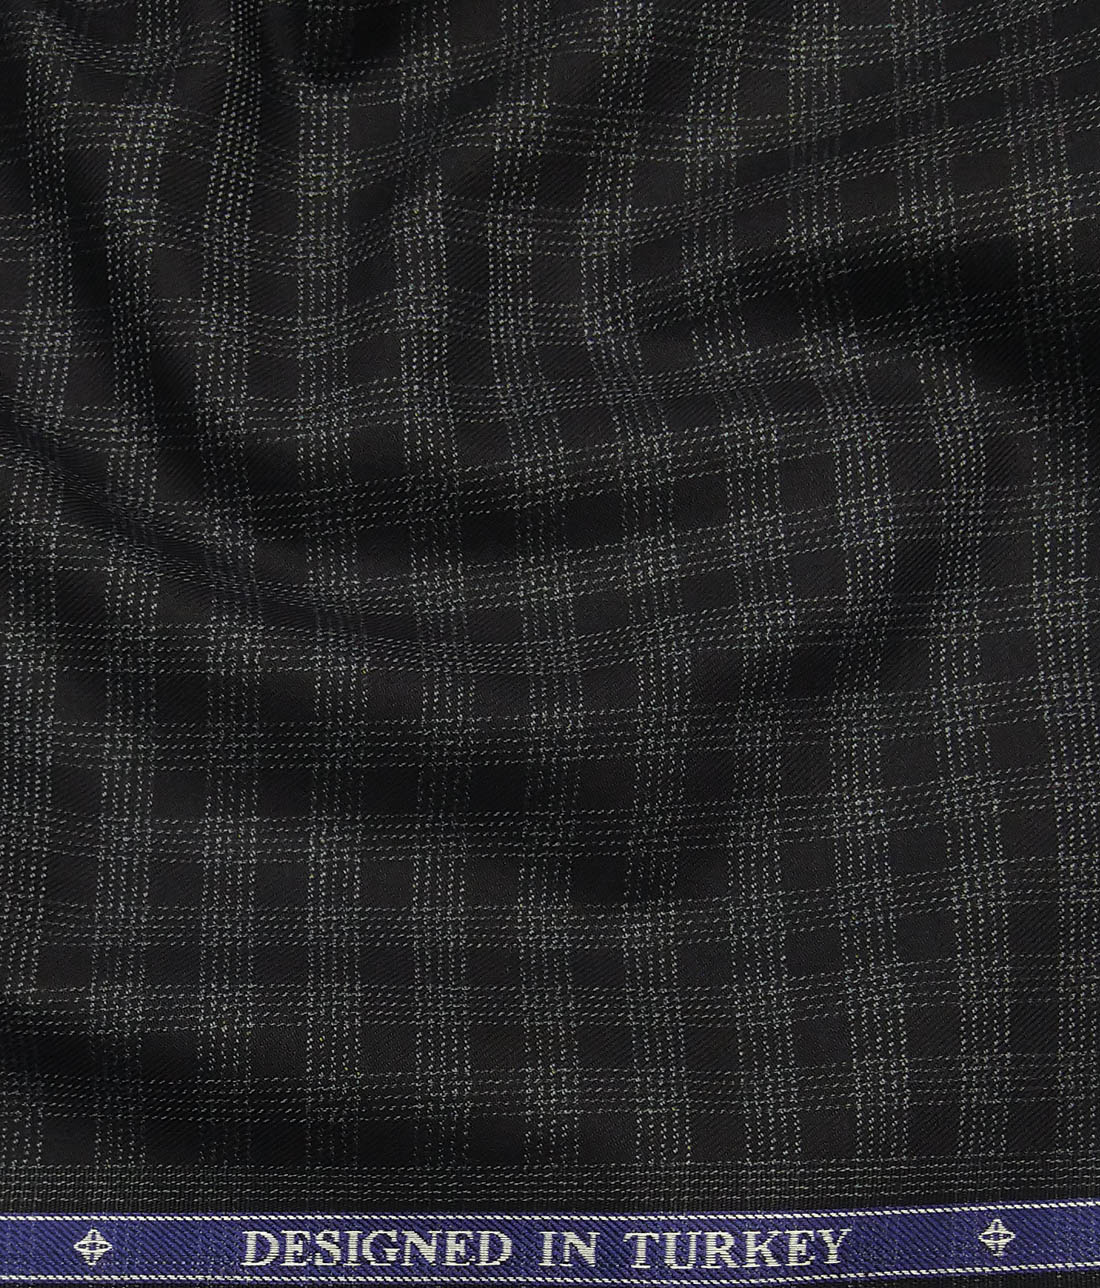 Soktas Black 100% Giza Cotton Grey Checks Shirt Fabric (1.60 M)